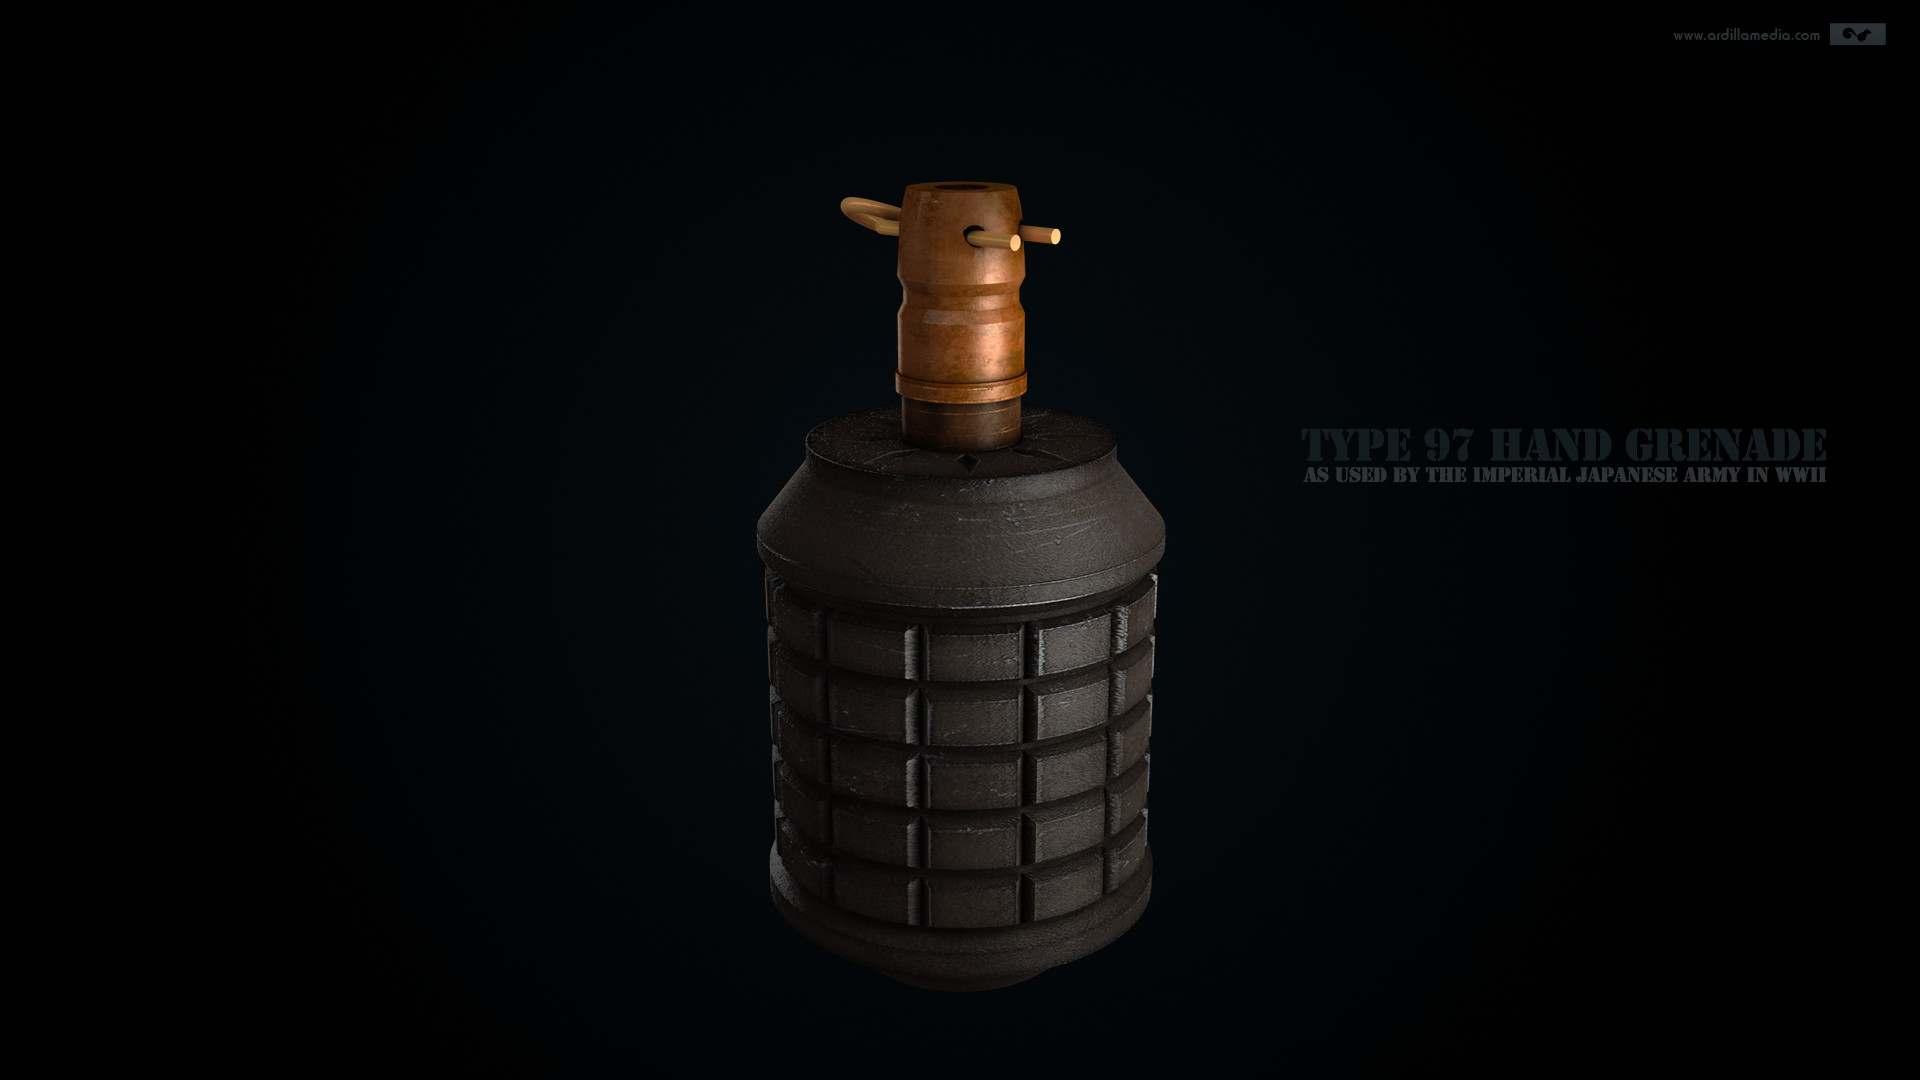 Mk2 hand grenade